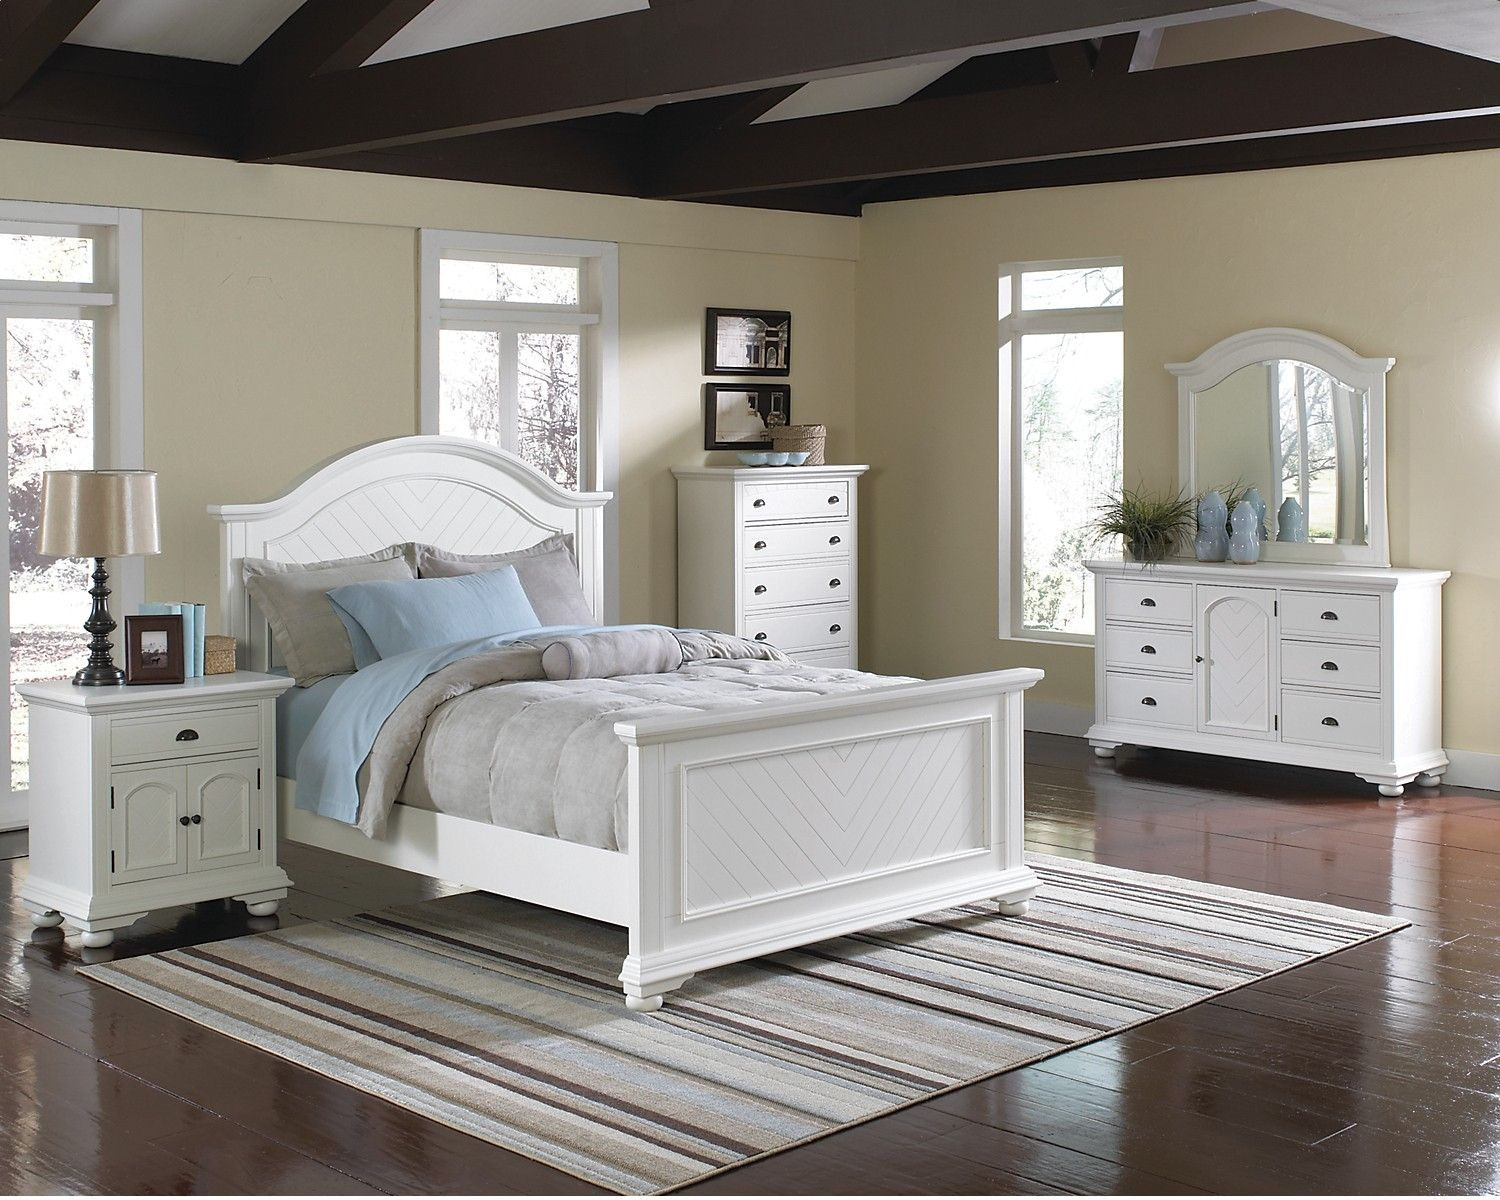 Bedroom Furniture Brook Off White 7 Piece Full Bedroom Set Stuff throughout measurements 1500 X 1200